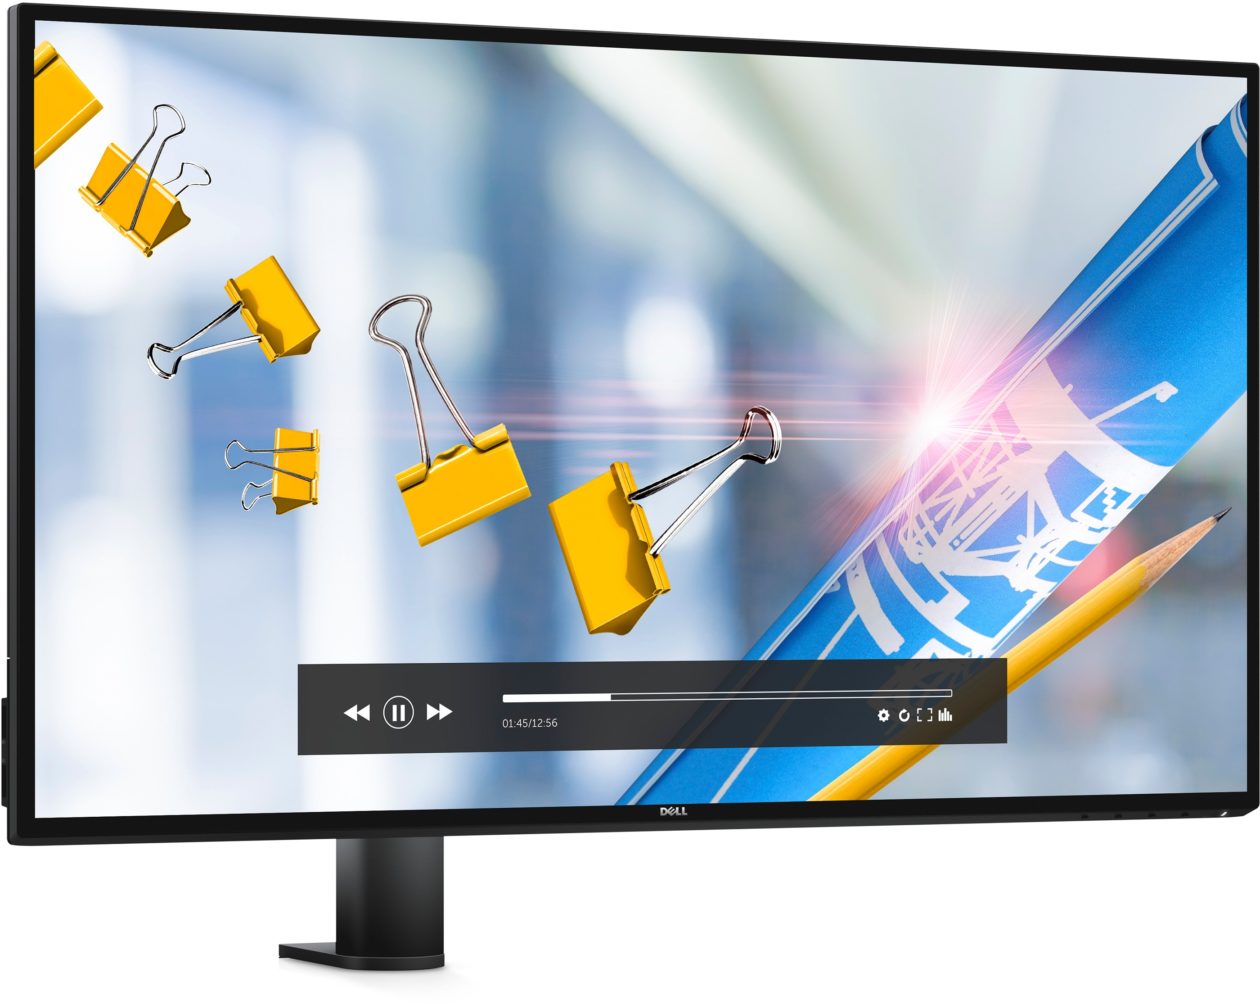 Review: We tested Dell's 27 ″ UltraSharp InfinityEdge U2717DA monitor